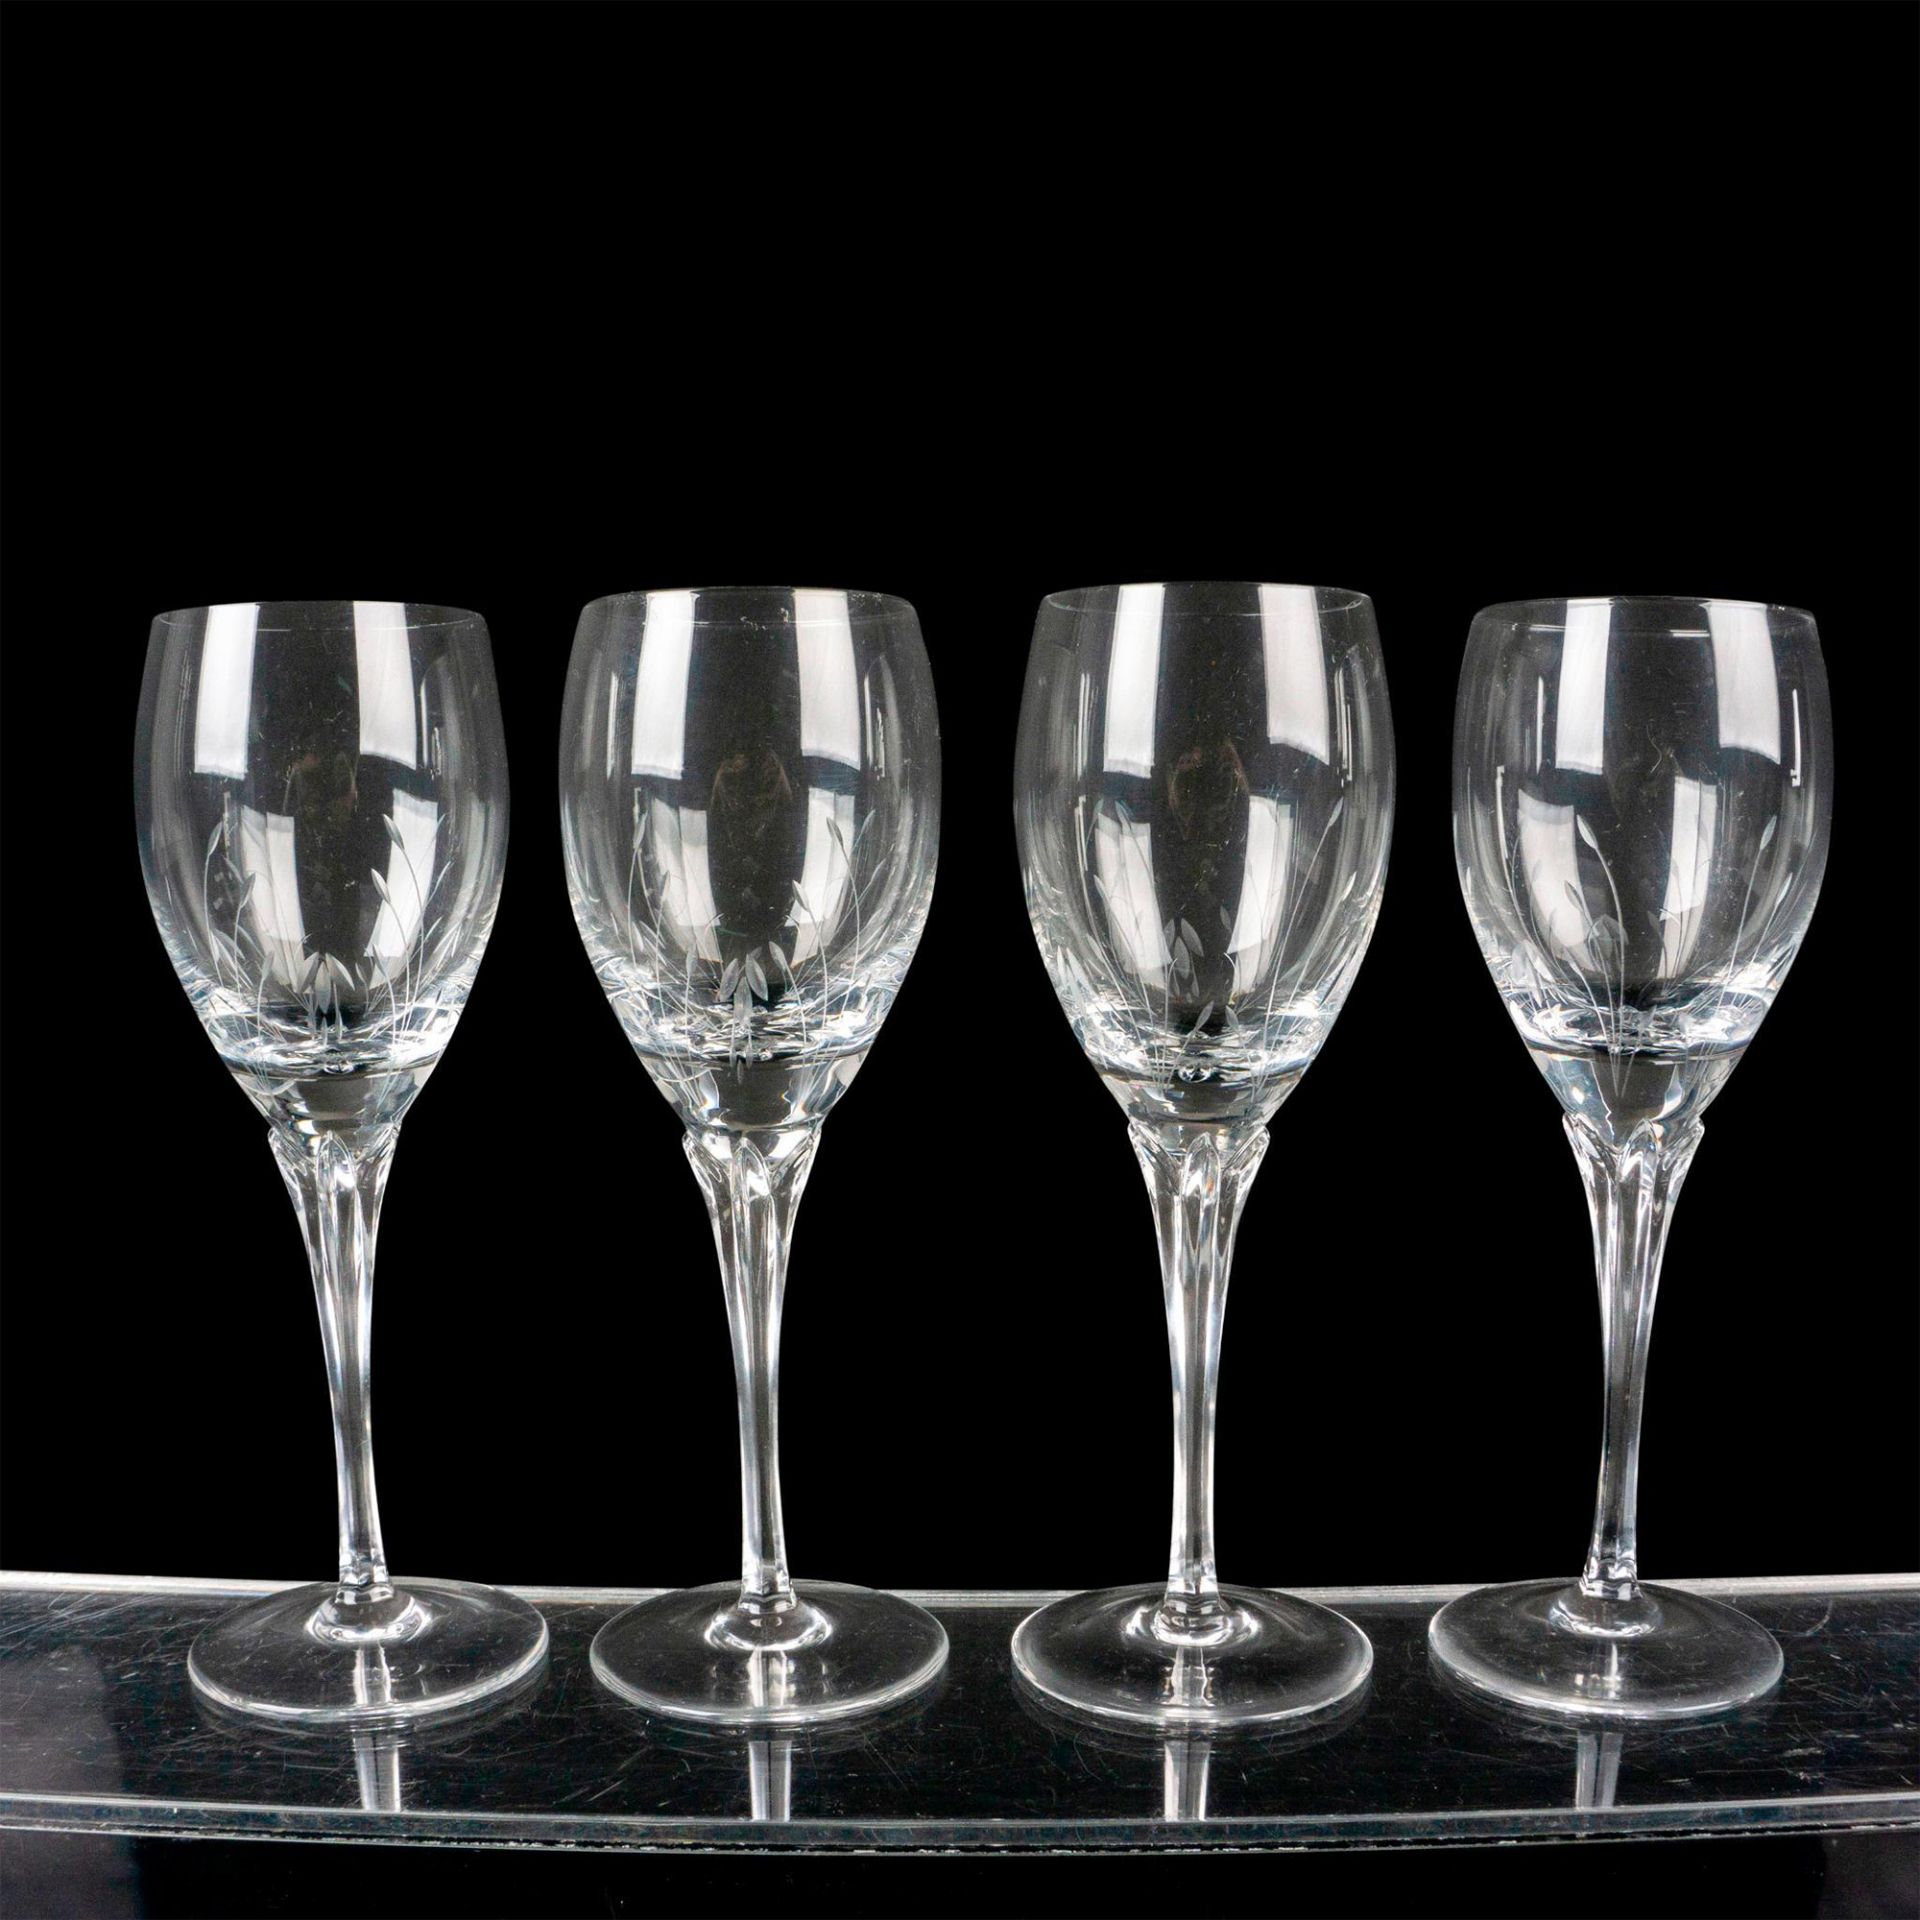 4pc Gorham Crystal Sherry/Dessert Wine Glasses, Jolie - Image 2 of 3